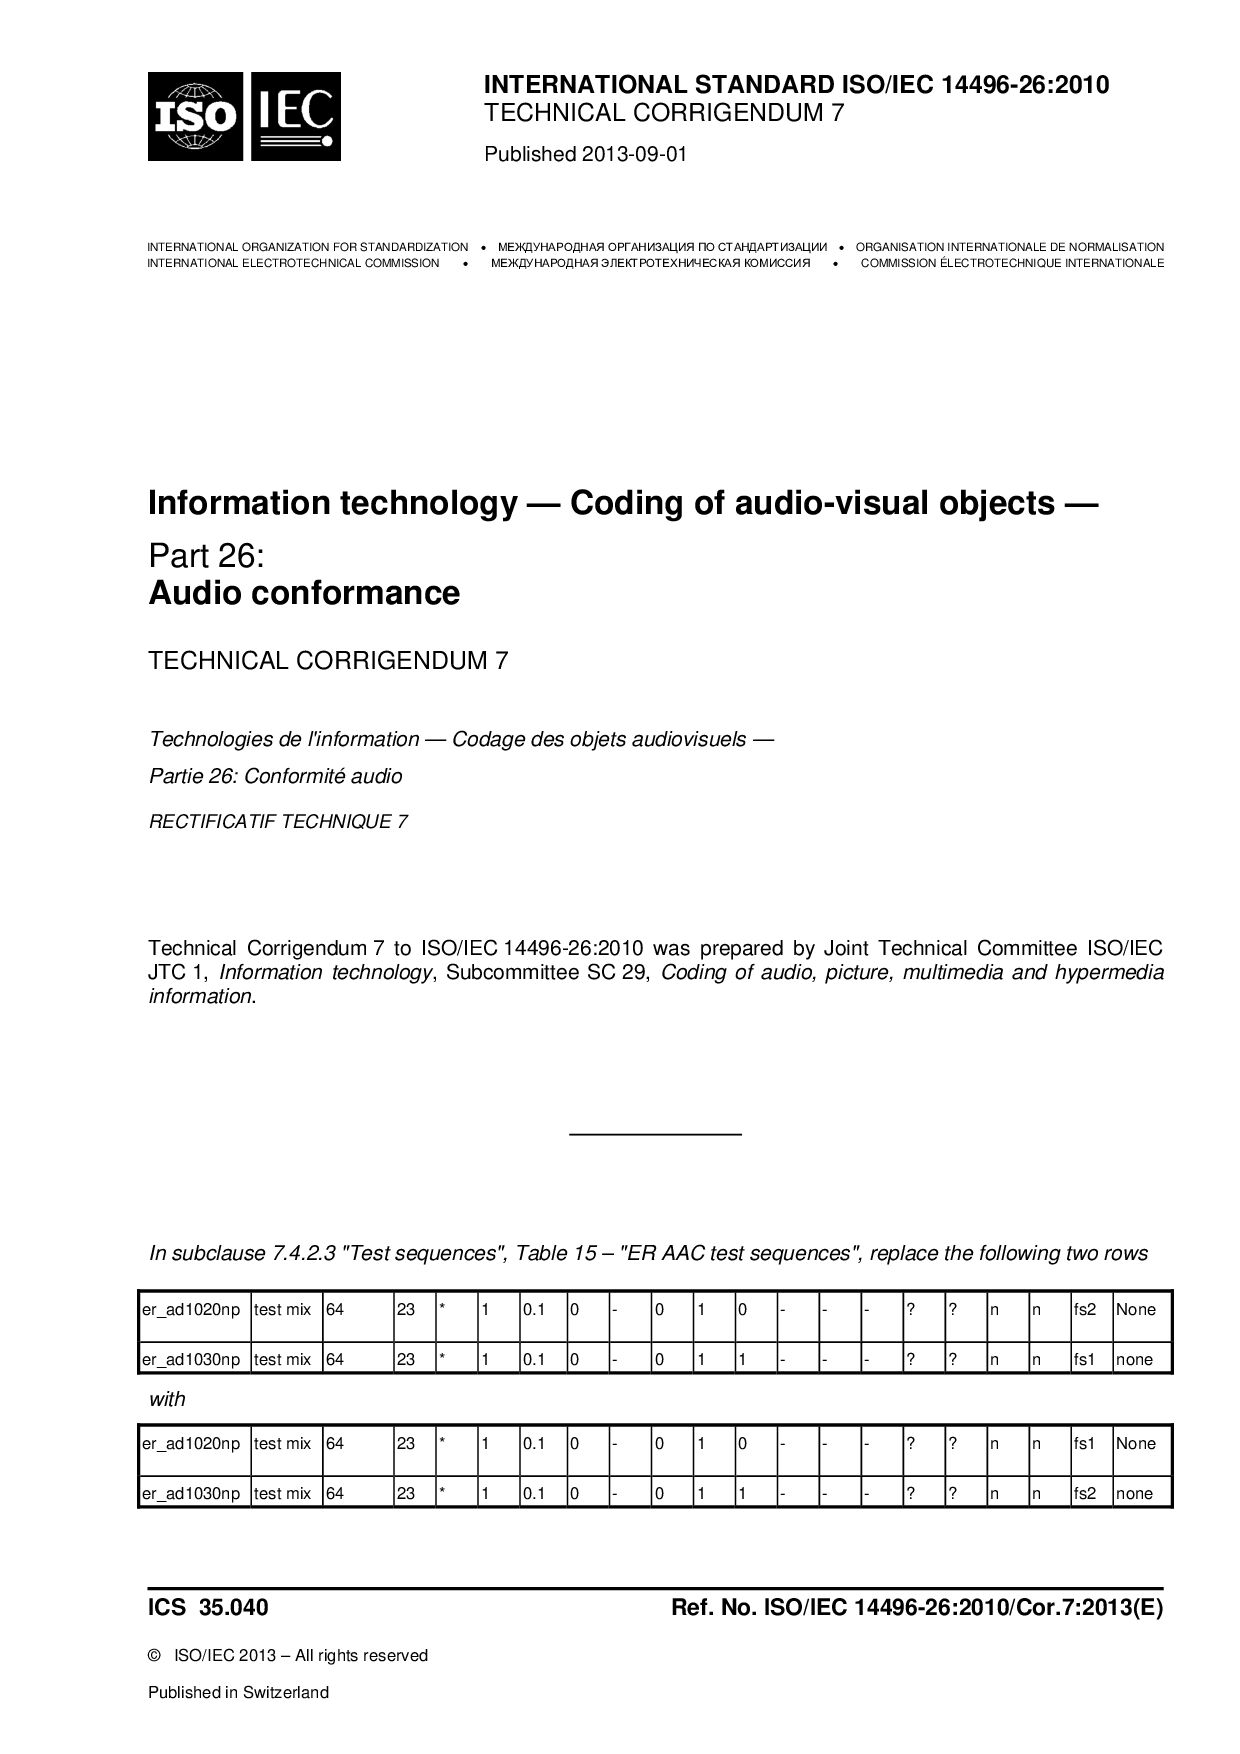 ISO/IEC 14496-26:2010/Cor 7:2013